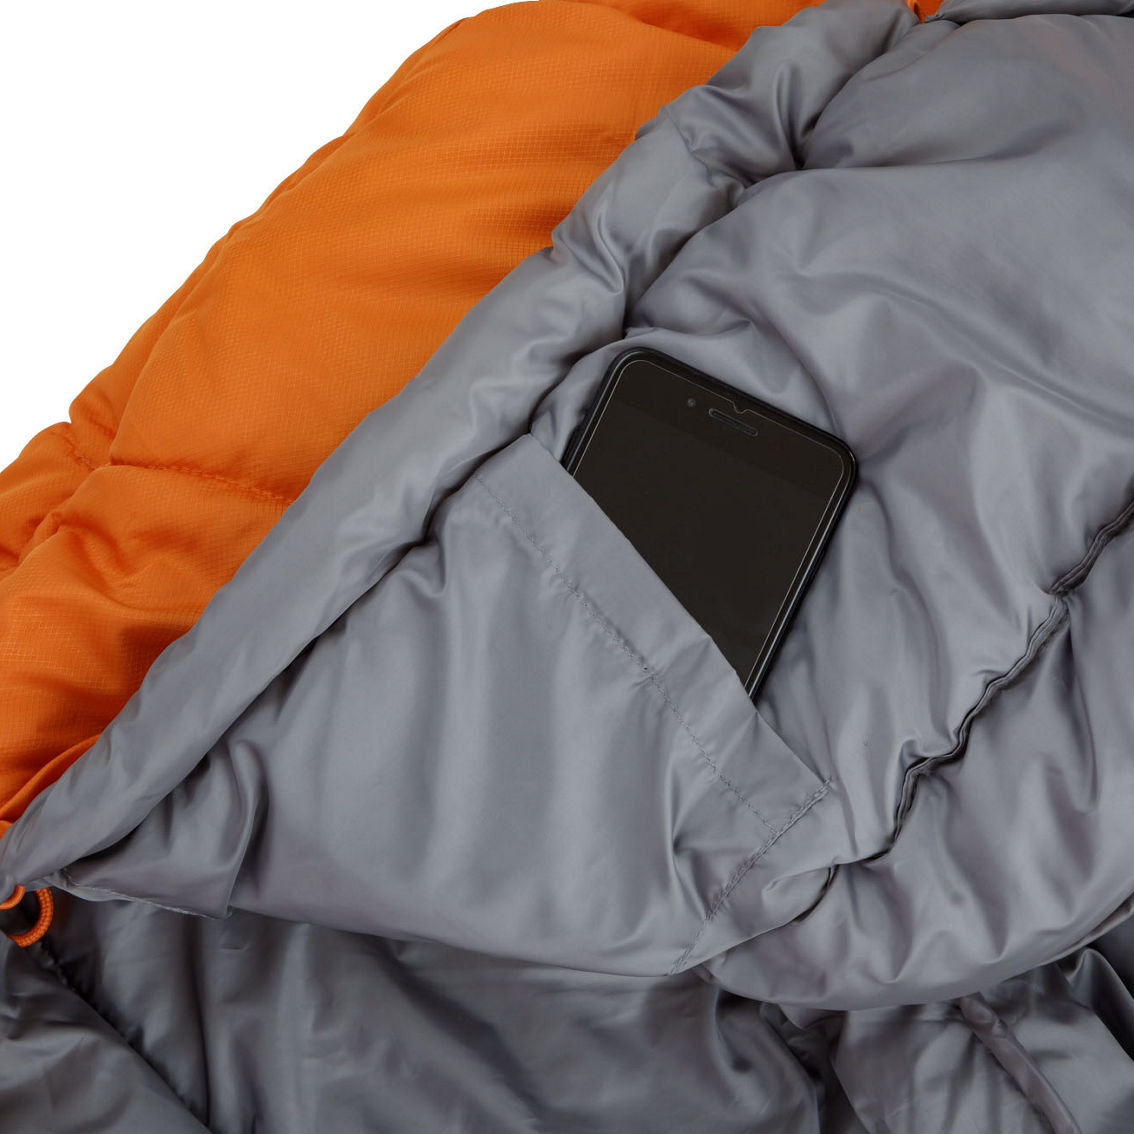 Core Equipment 20 Degree Hybrid Sleeping Bag - Image 5 of 5